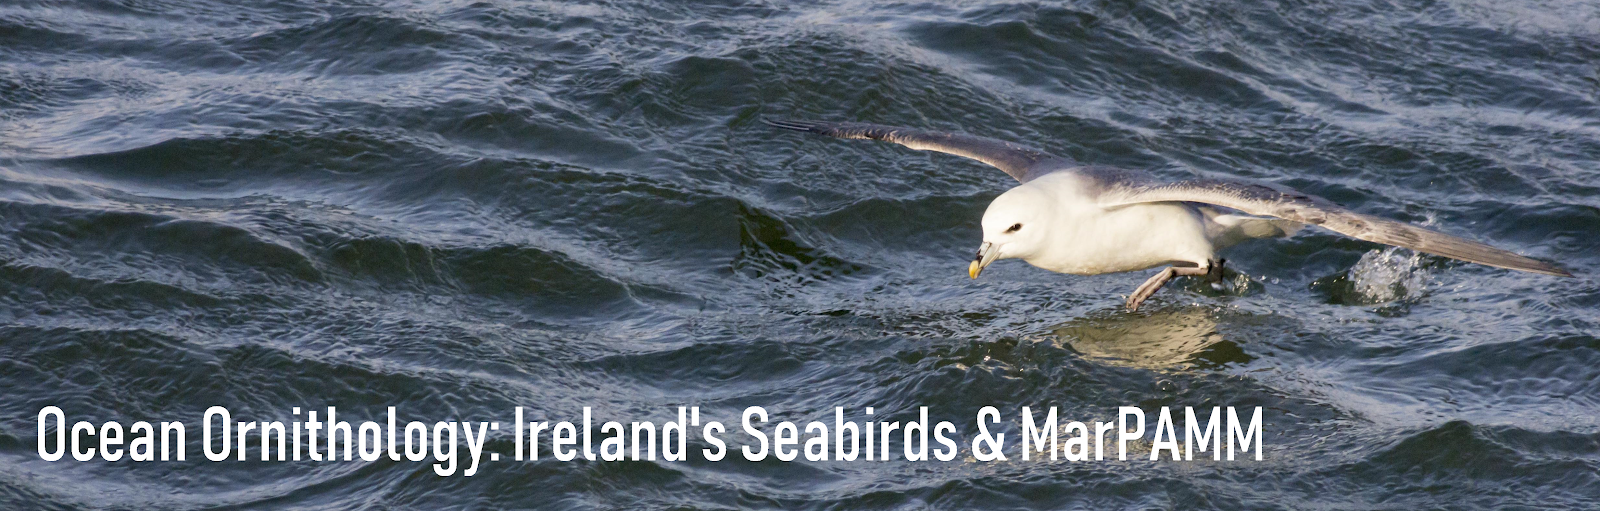 Ocean Ornithology: Ireland's Seabirds and MarPAMM Project